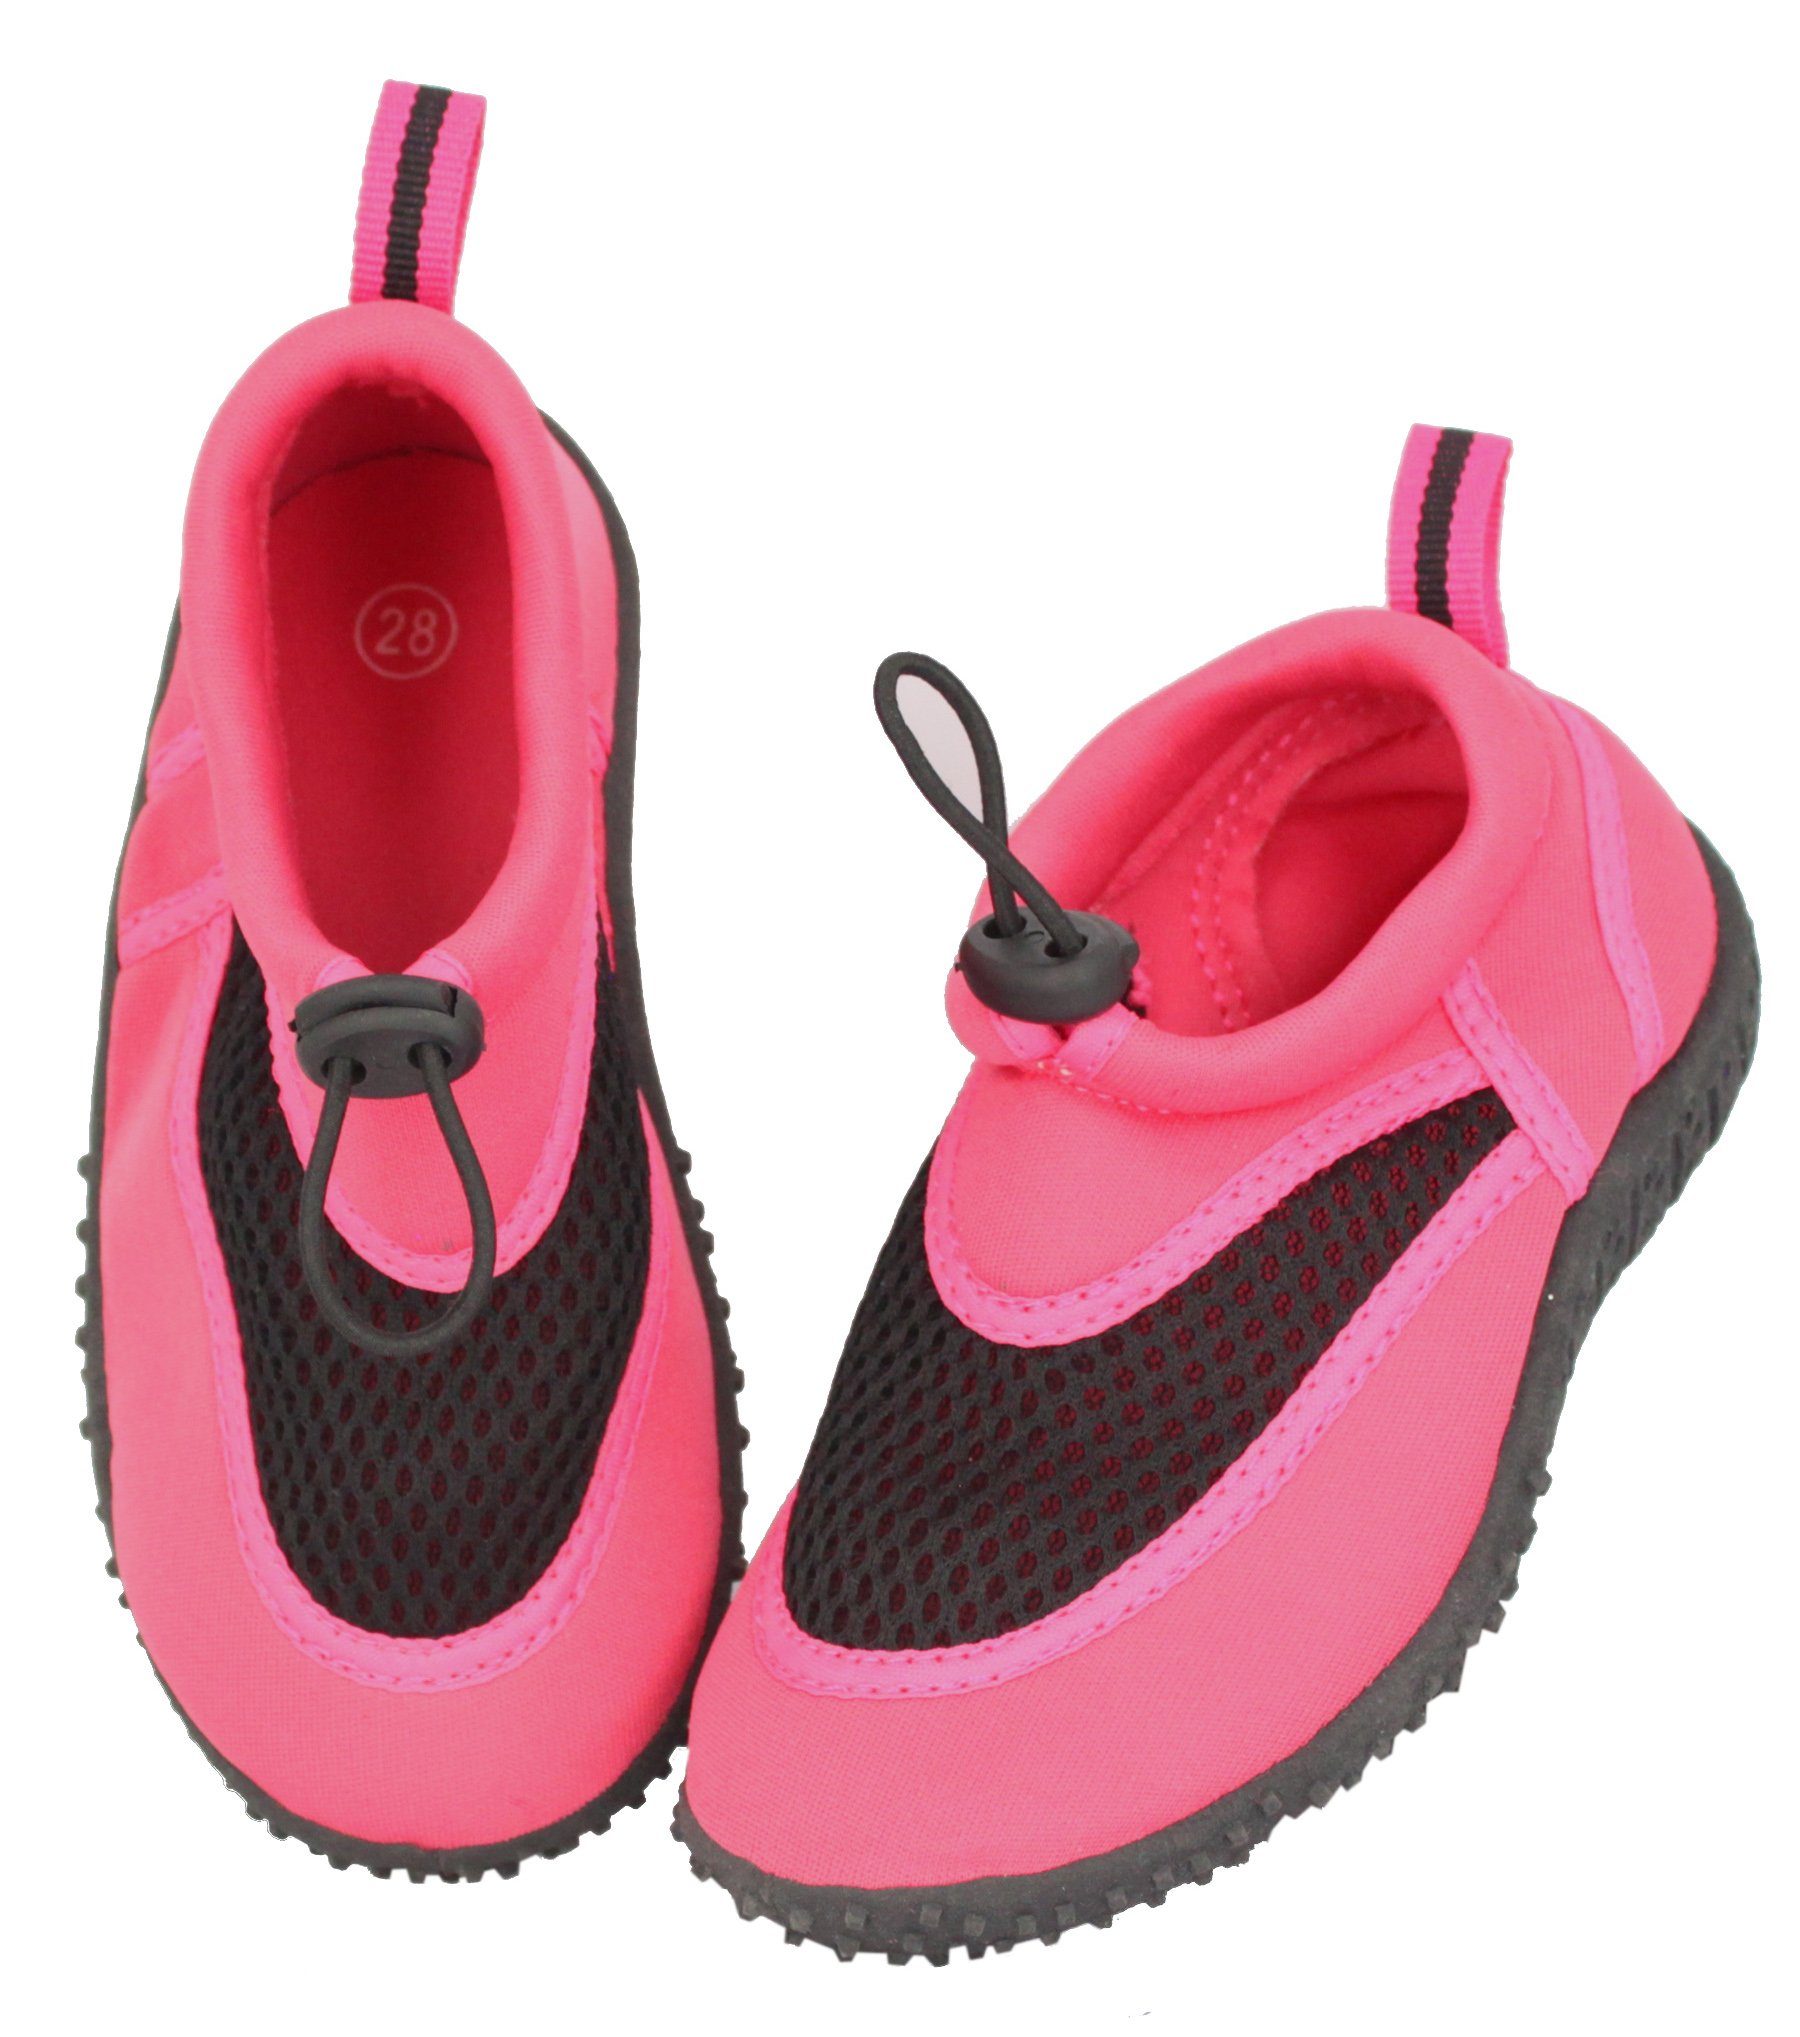 Beck Badeschuh Aqua Badeschuh (leichte, flexible, stabile Schuhe, für geschützte Füße an Pool und Strand) rutschfeste flexible Laufsohle, schnelltrocknend pink